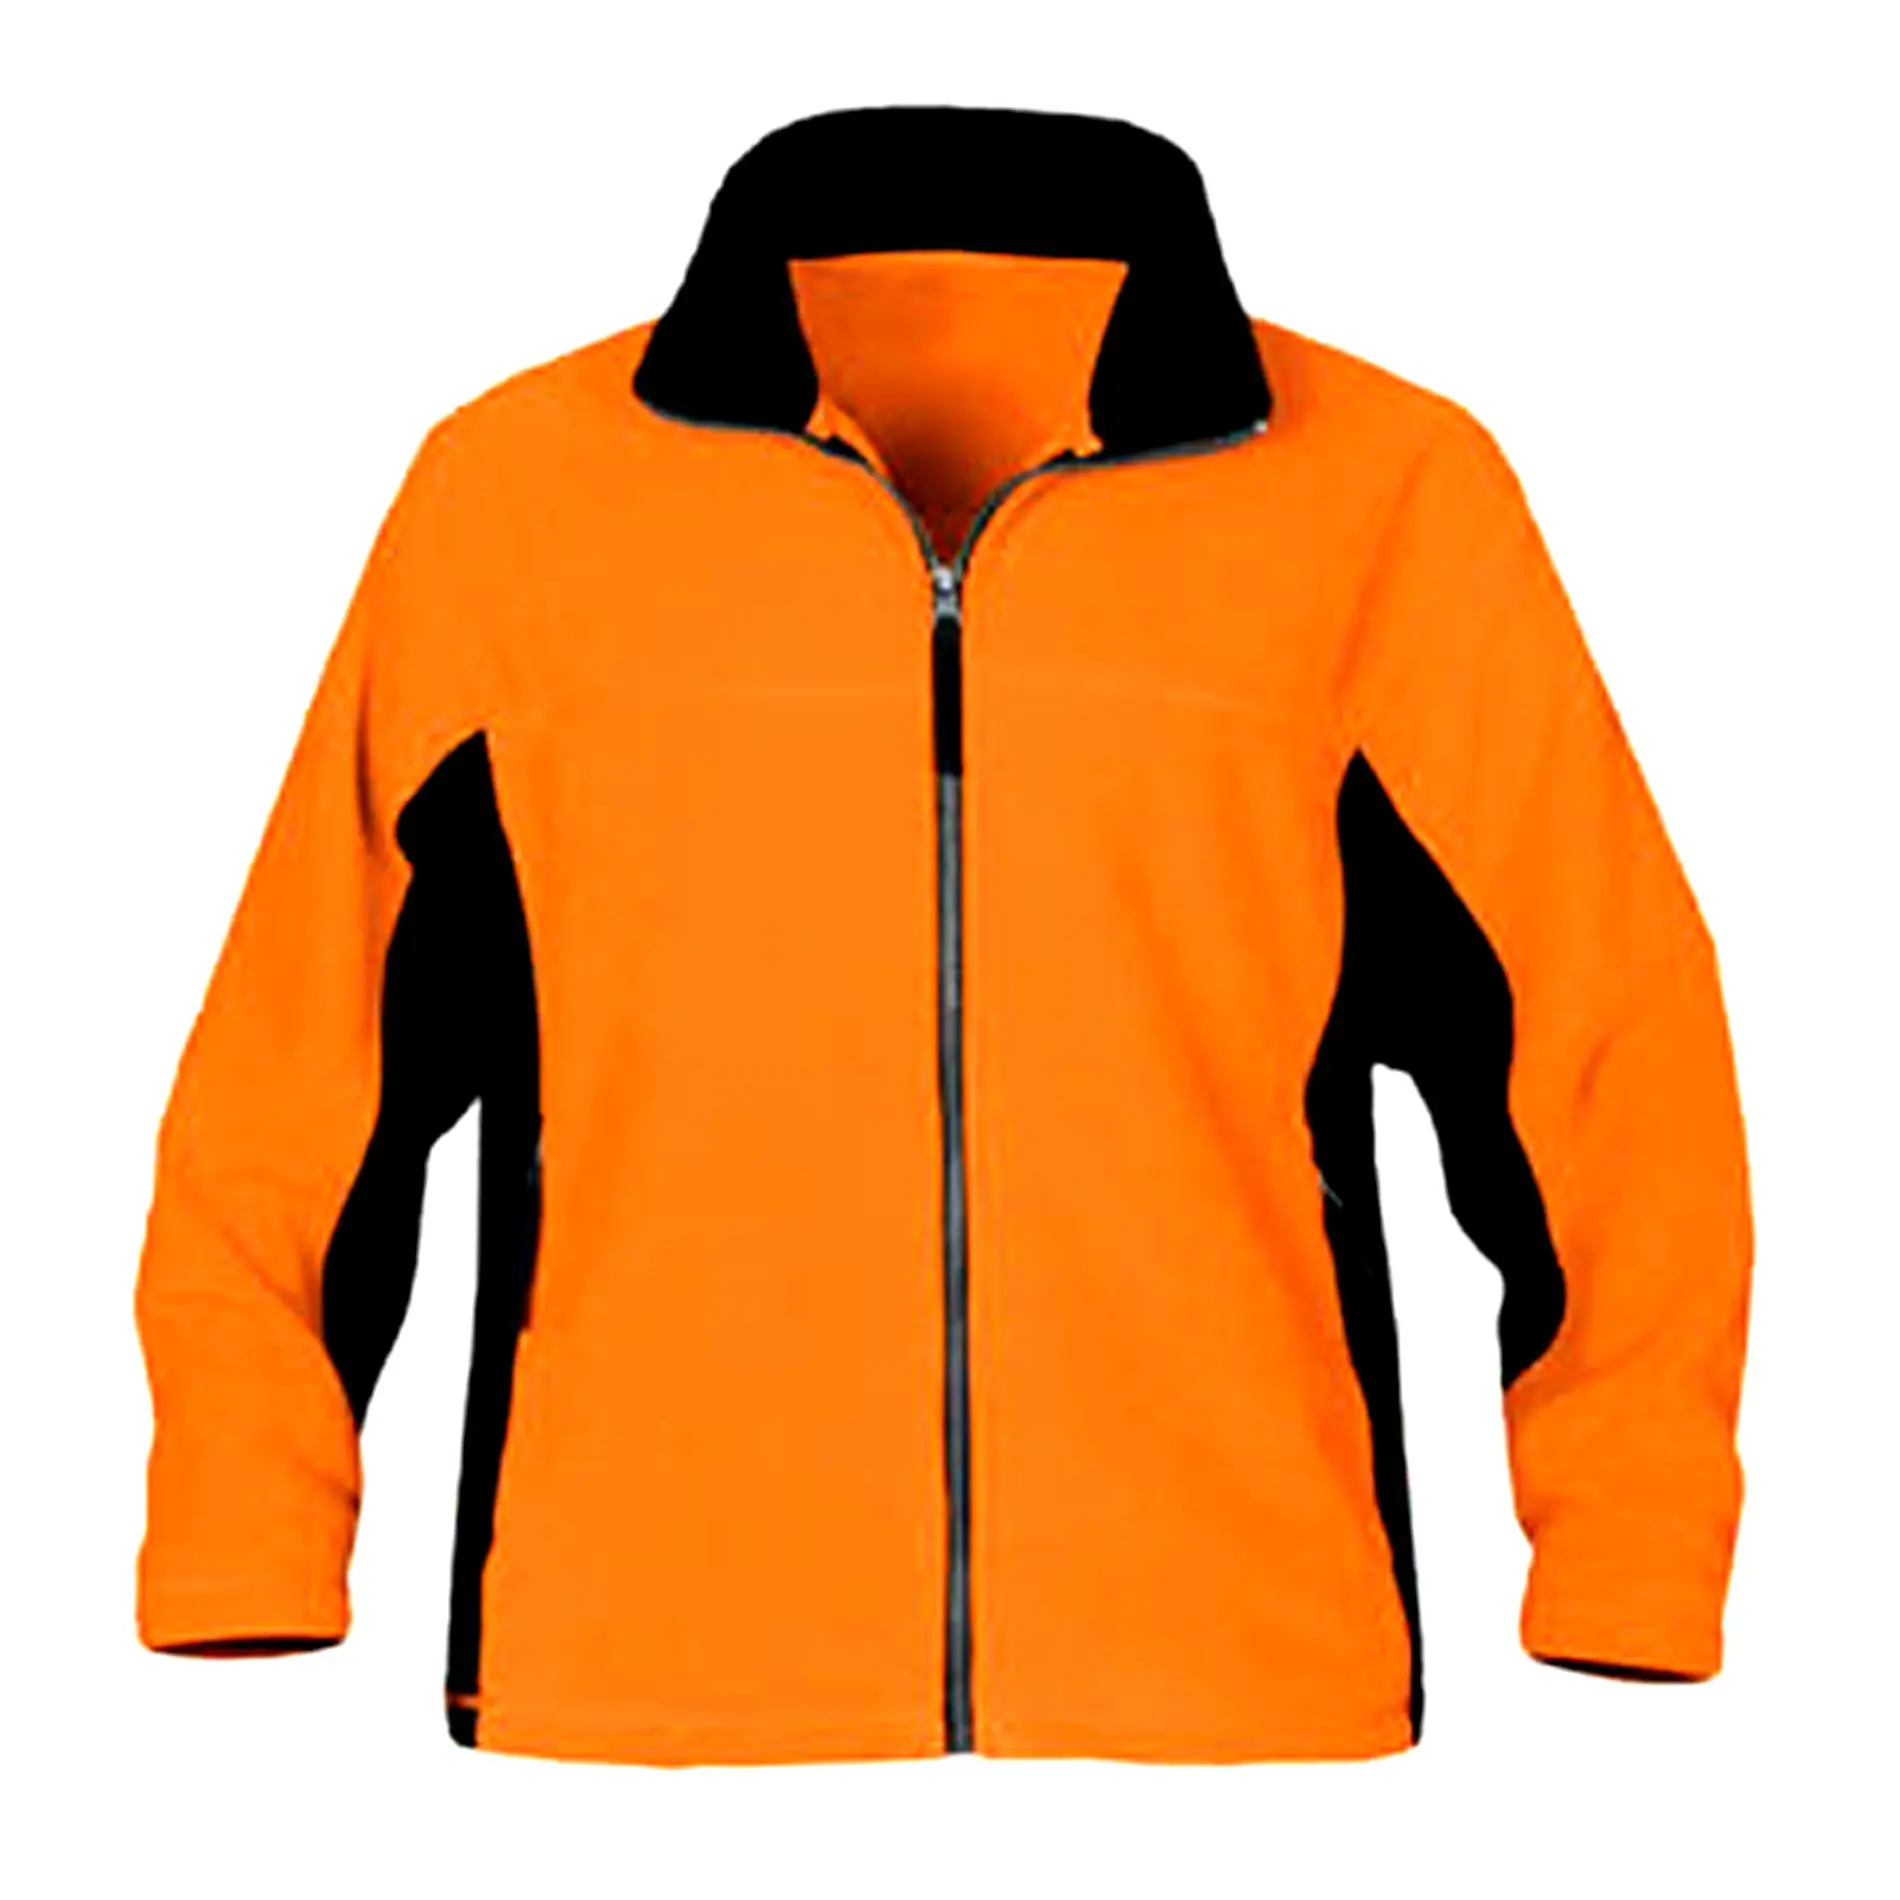 EW style-chaqueta polar personalizada para hombre, chaqueta unisex, nueva moda